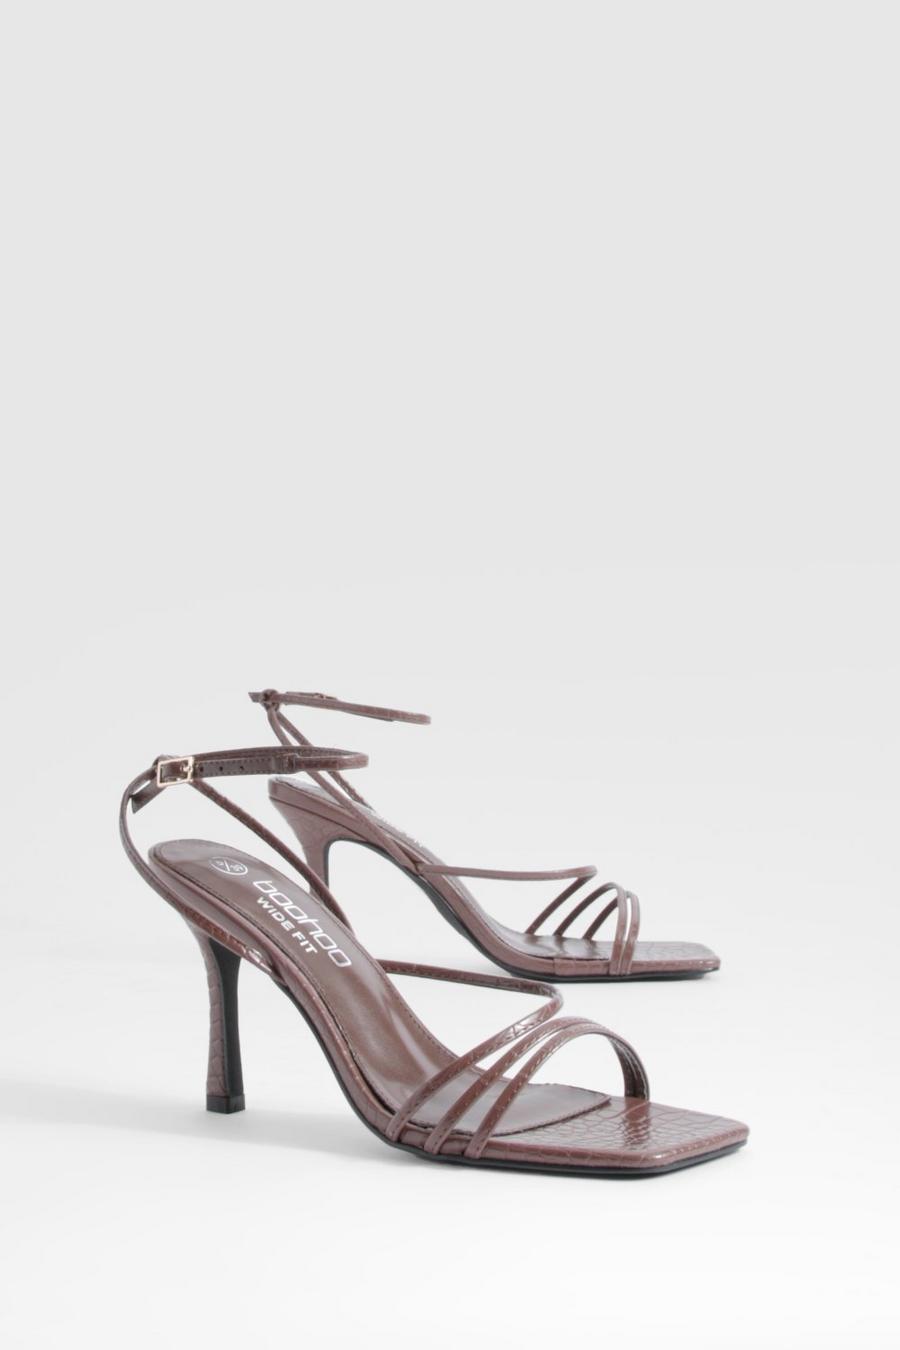 Chocolate Asymmetriska sandaletter med krokodilskinnseffekt, stilettklack och bred passform